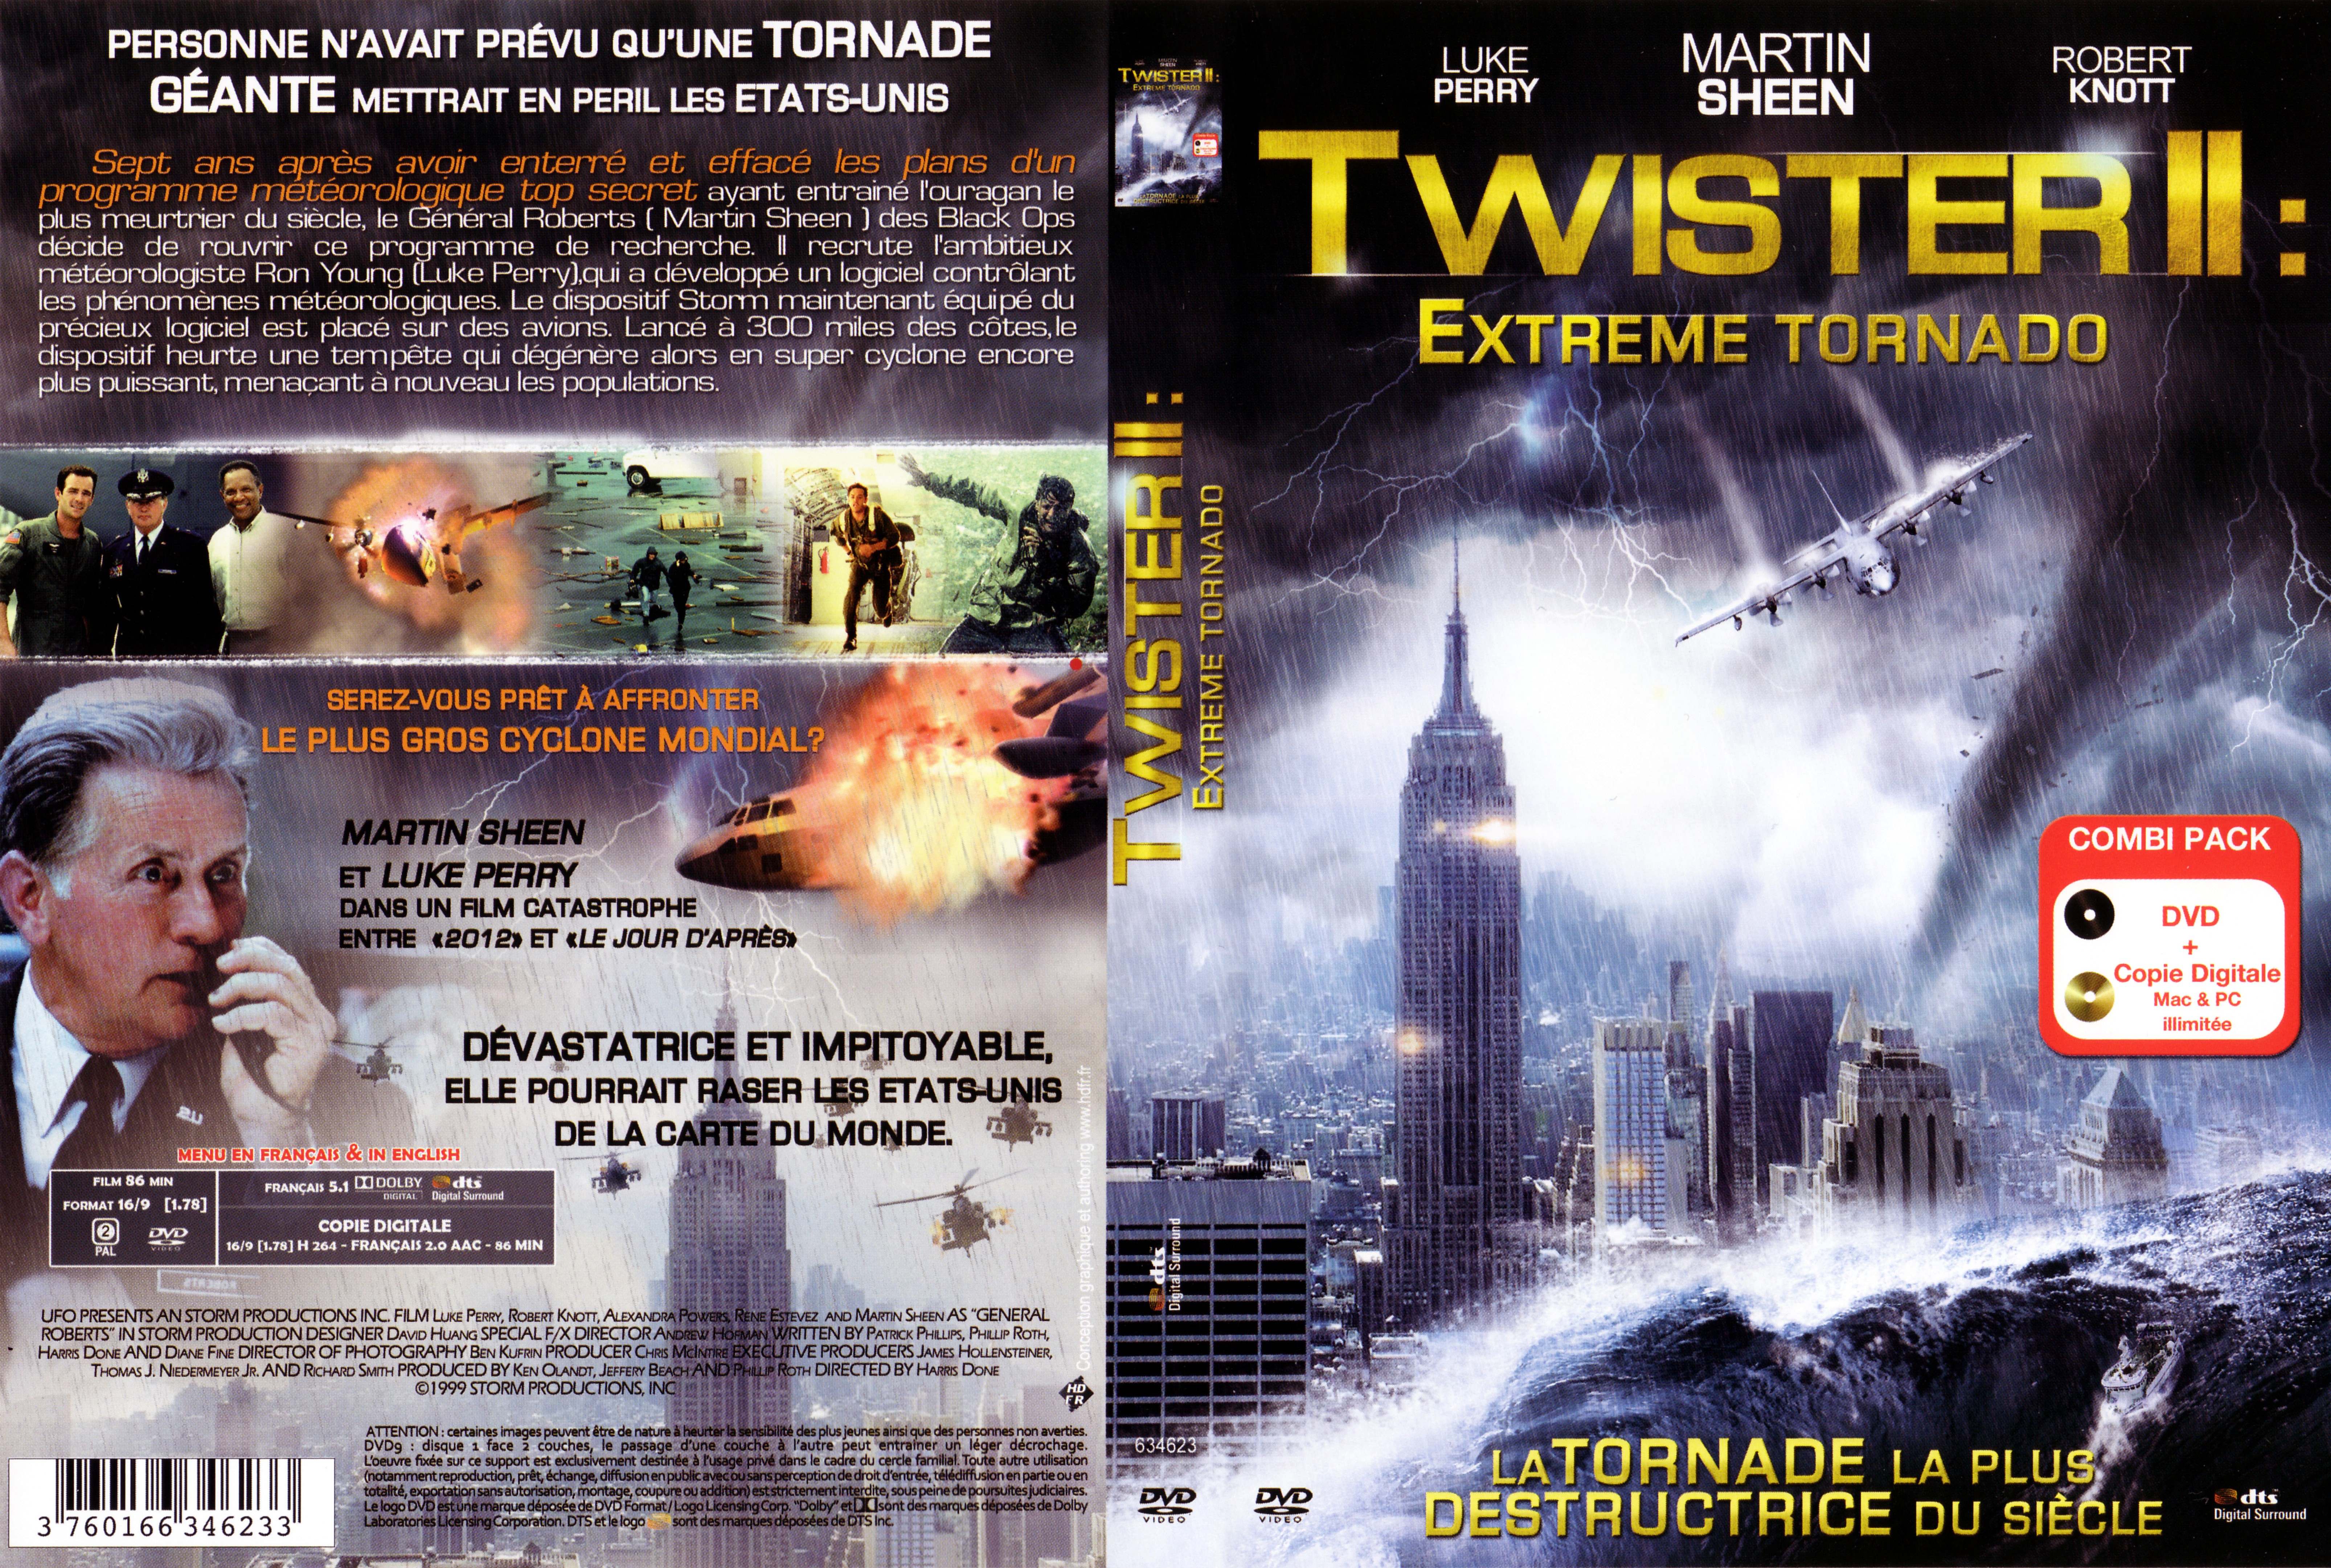 Jaquette DVD Twister 2 - Extreme tornado